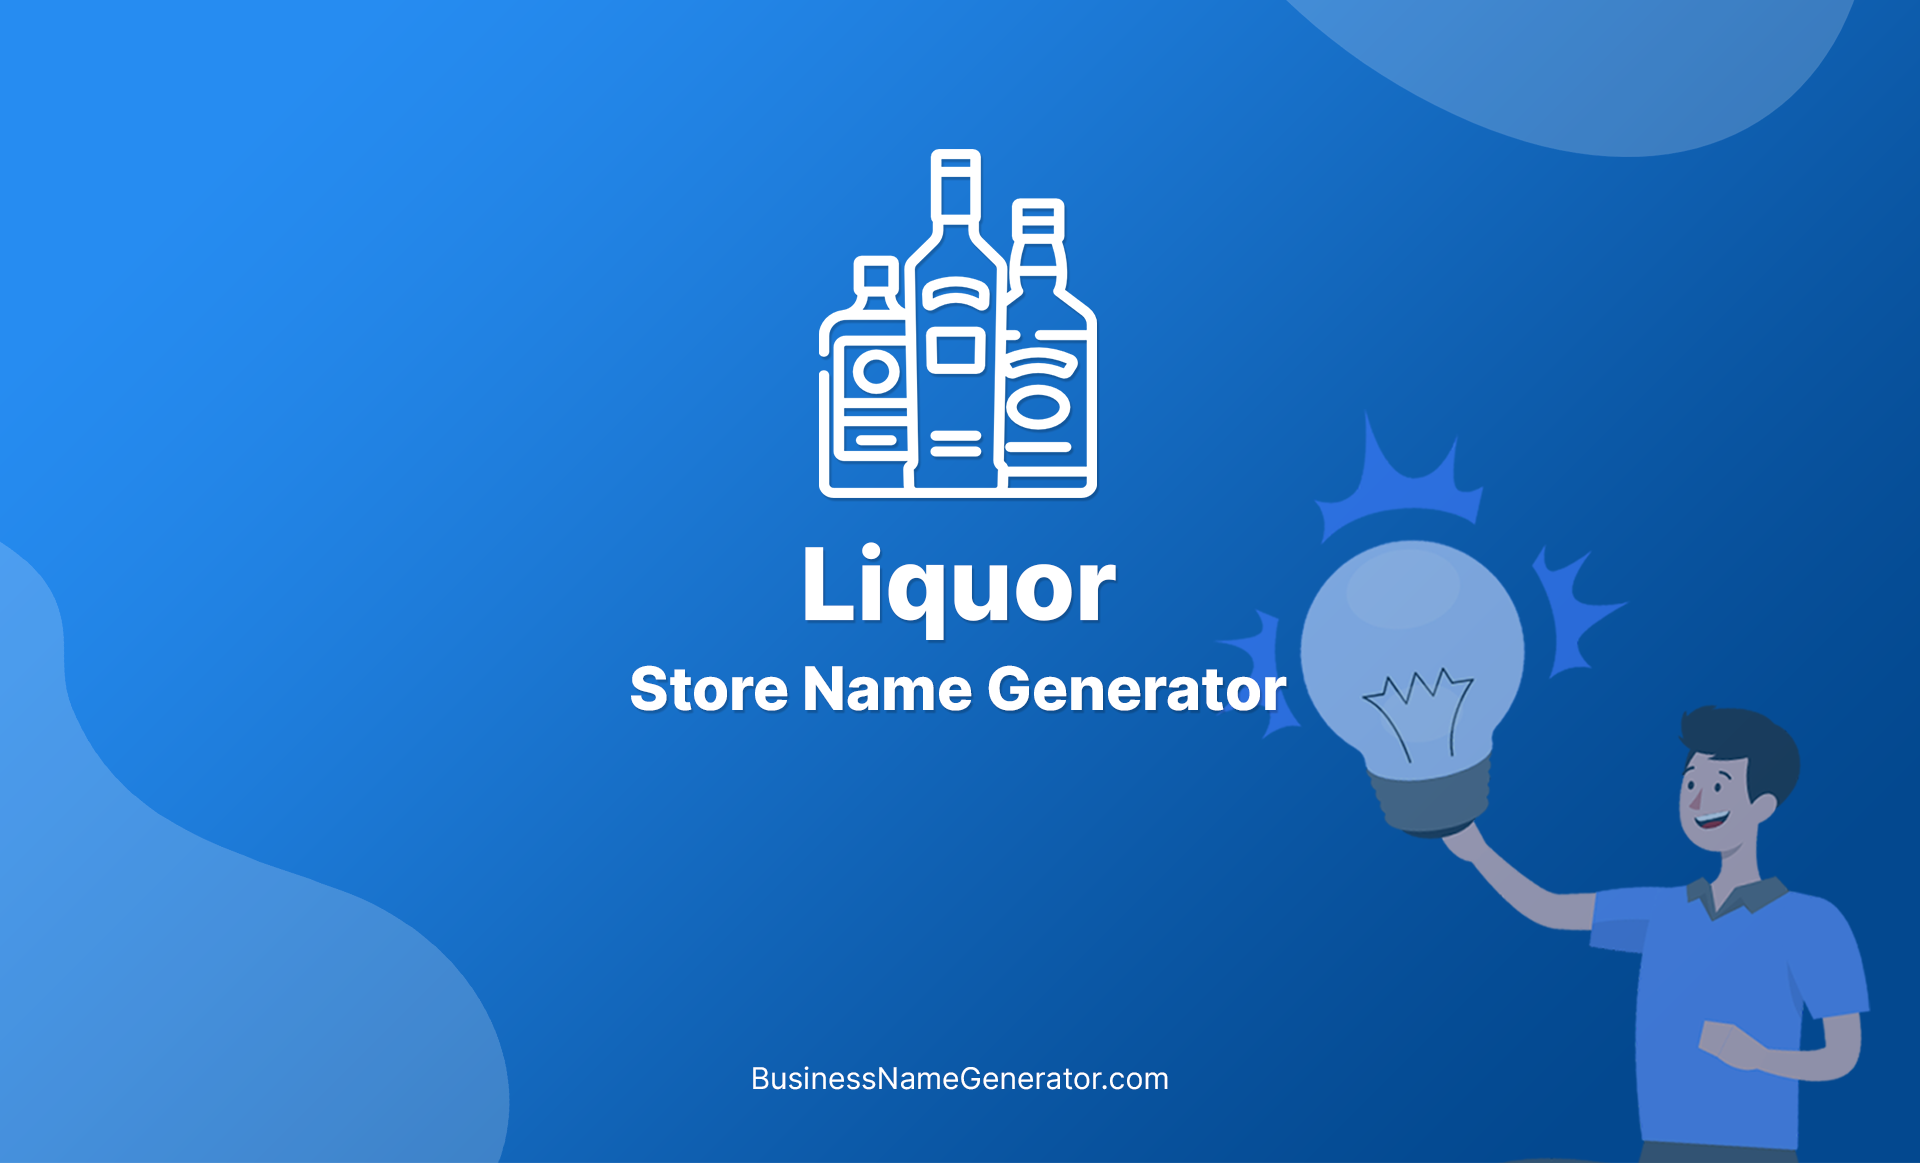 Liquor Store Name Generator